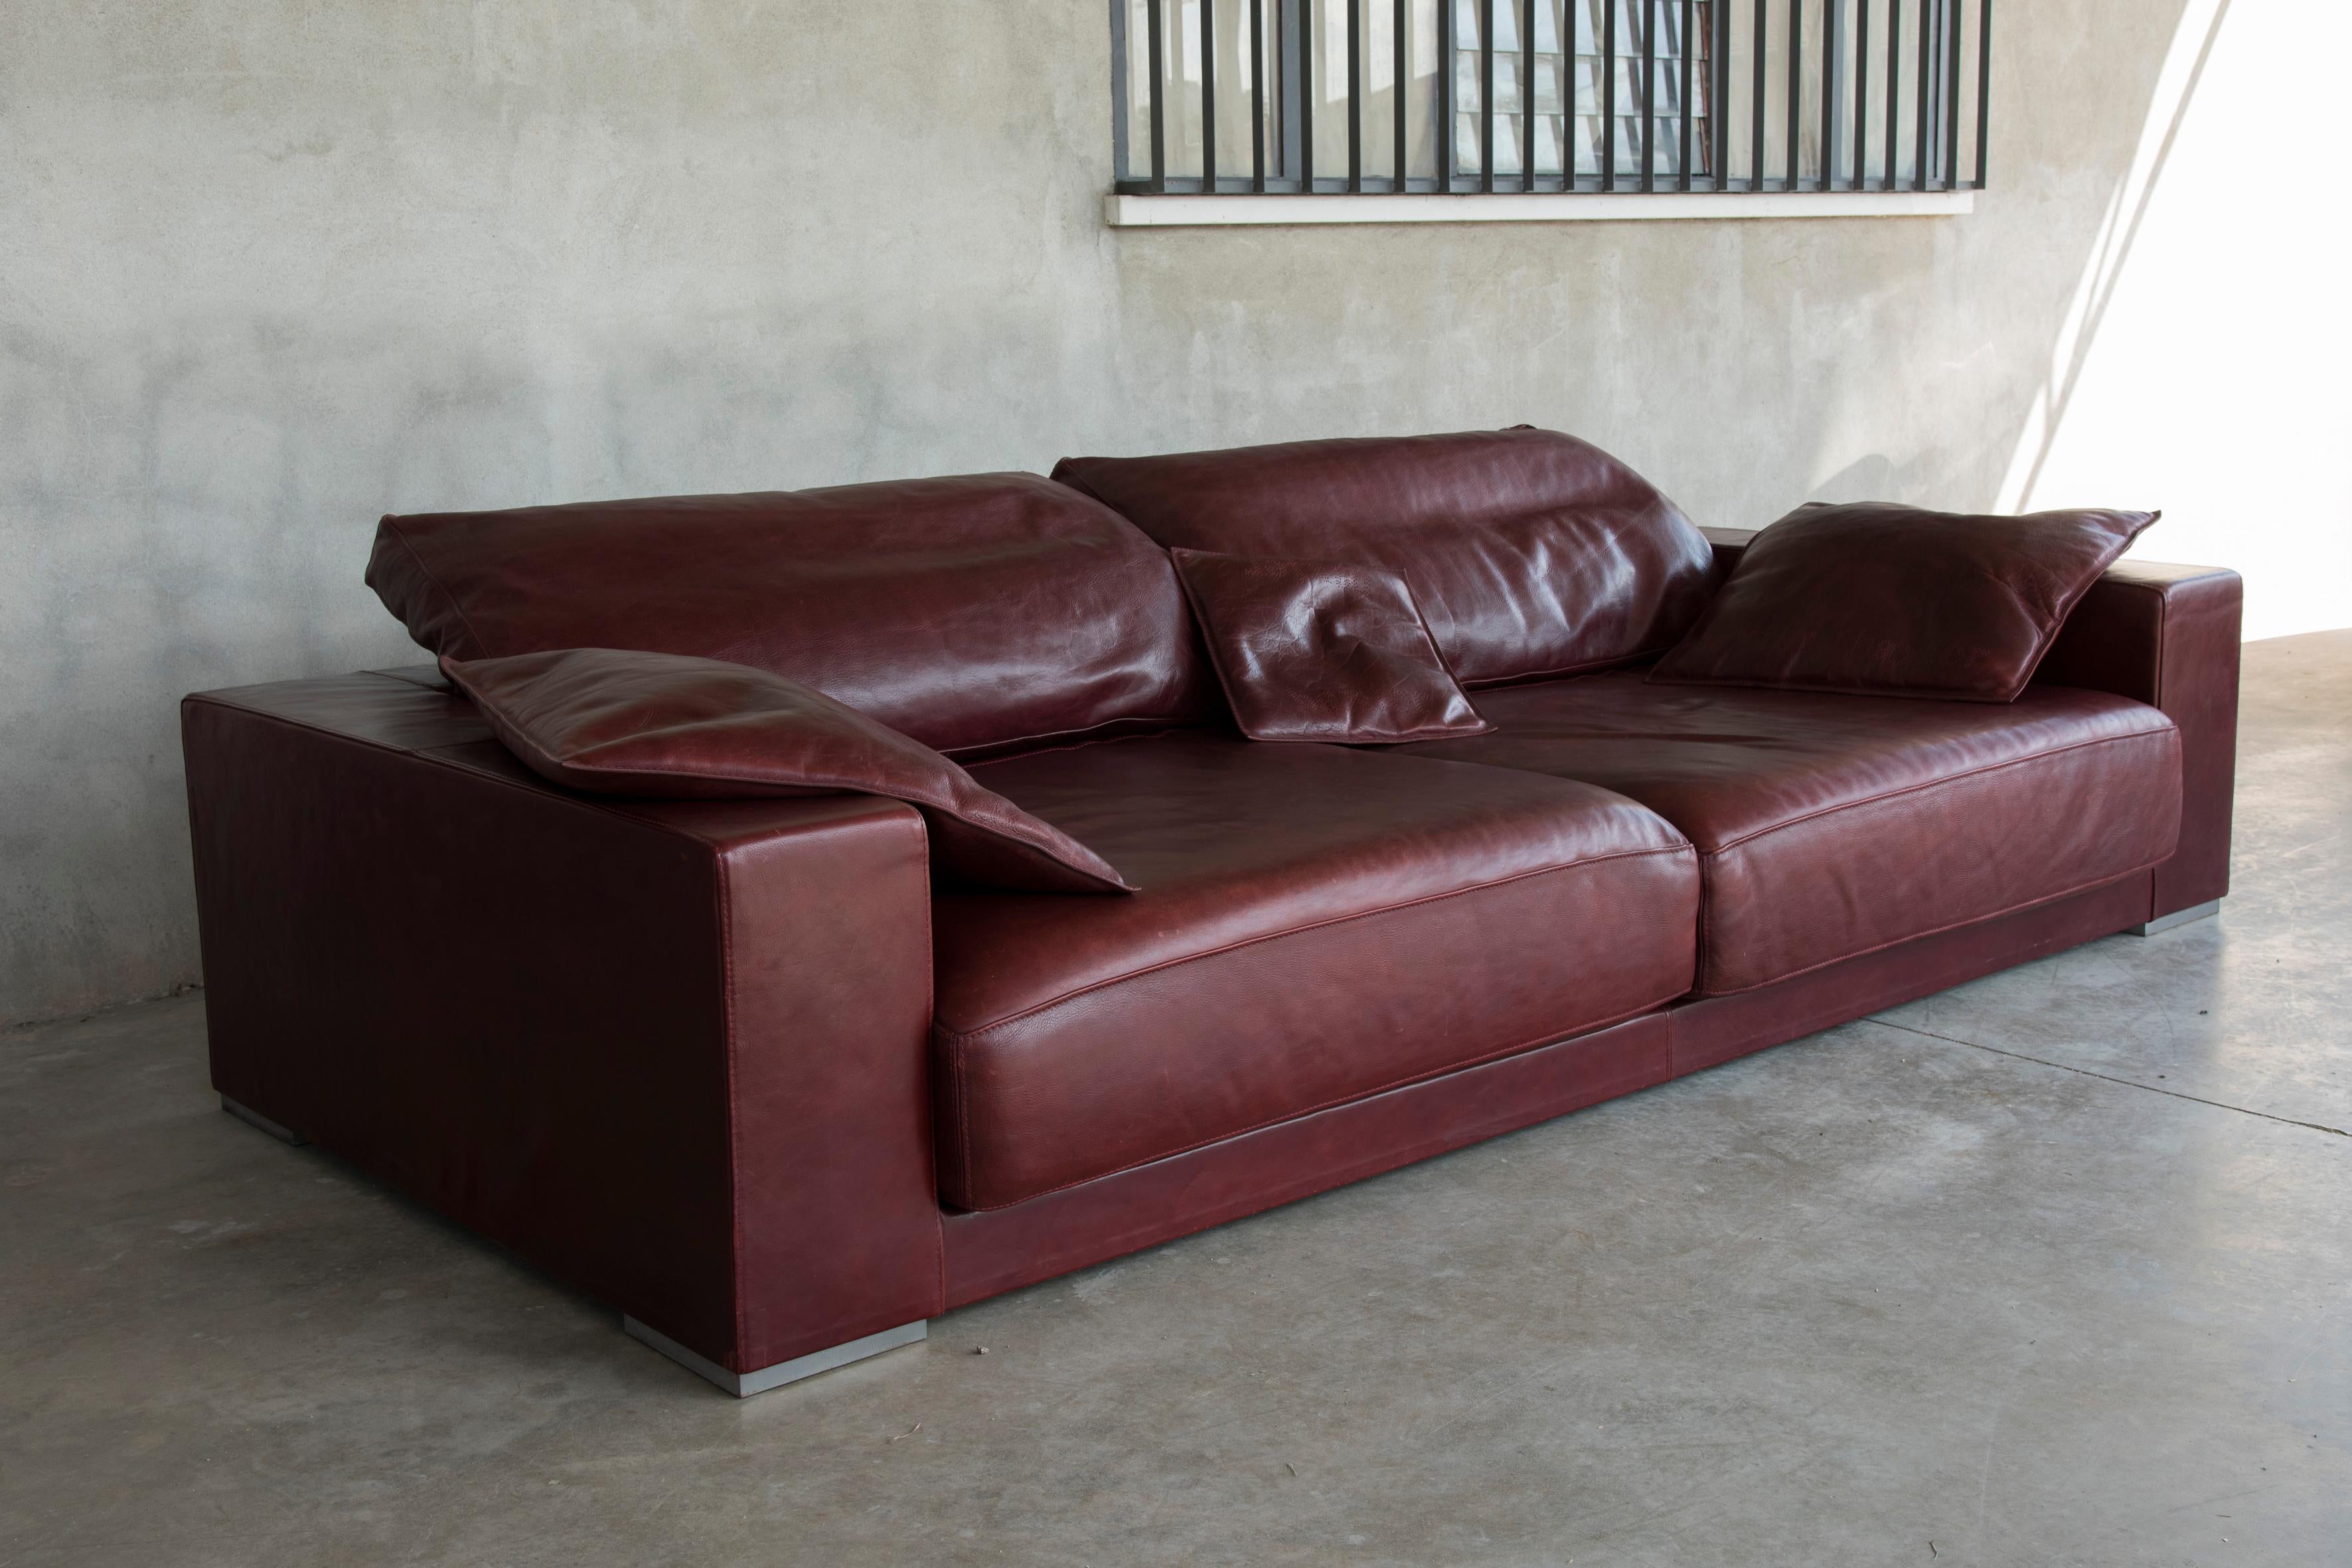 Baxter Budapest - For Sale on 1stDibs | baxter budapest soft sofa price